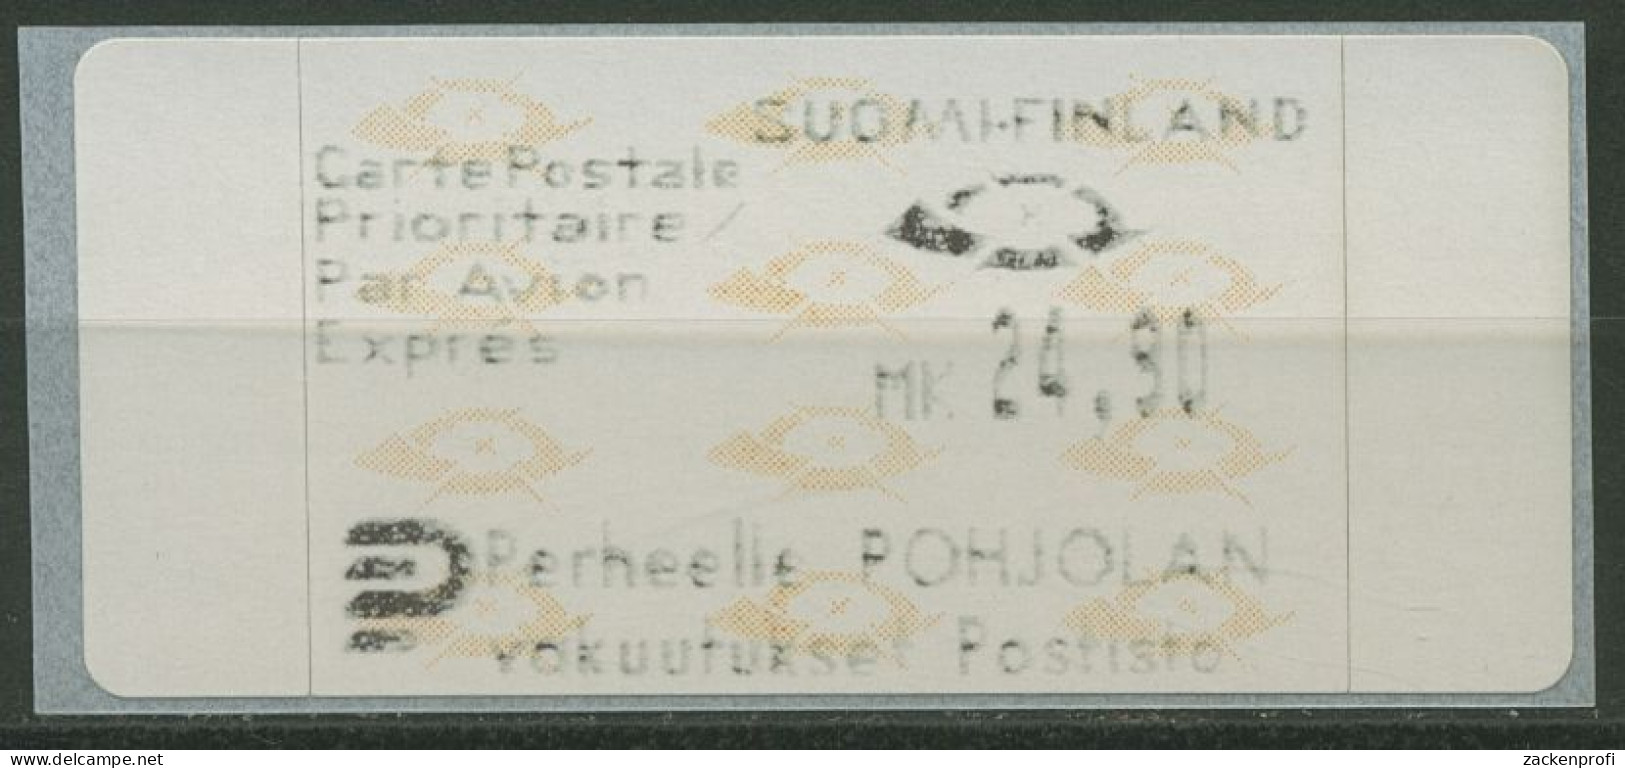 Finnland Automatenmarken 1992 Posthörner Einzelwert ATM 12.3 Z4 Postfrisch - Timbres De Distributeurs [ATM]